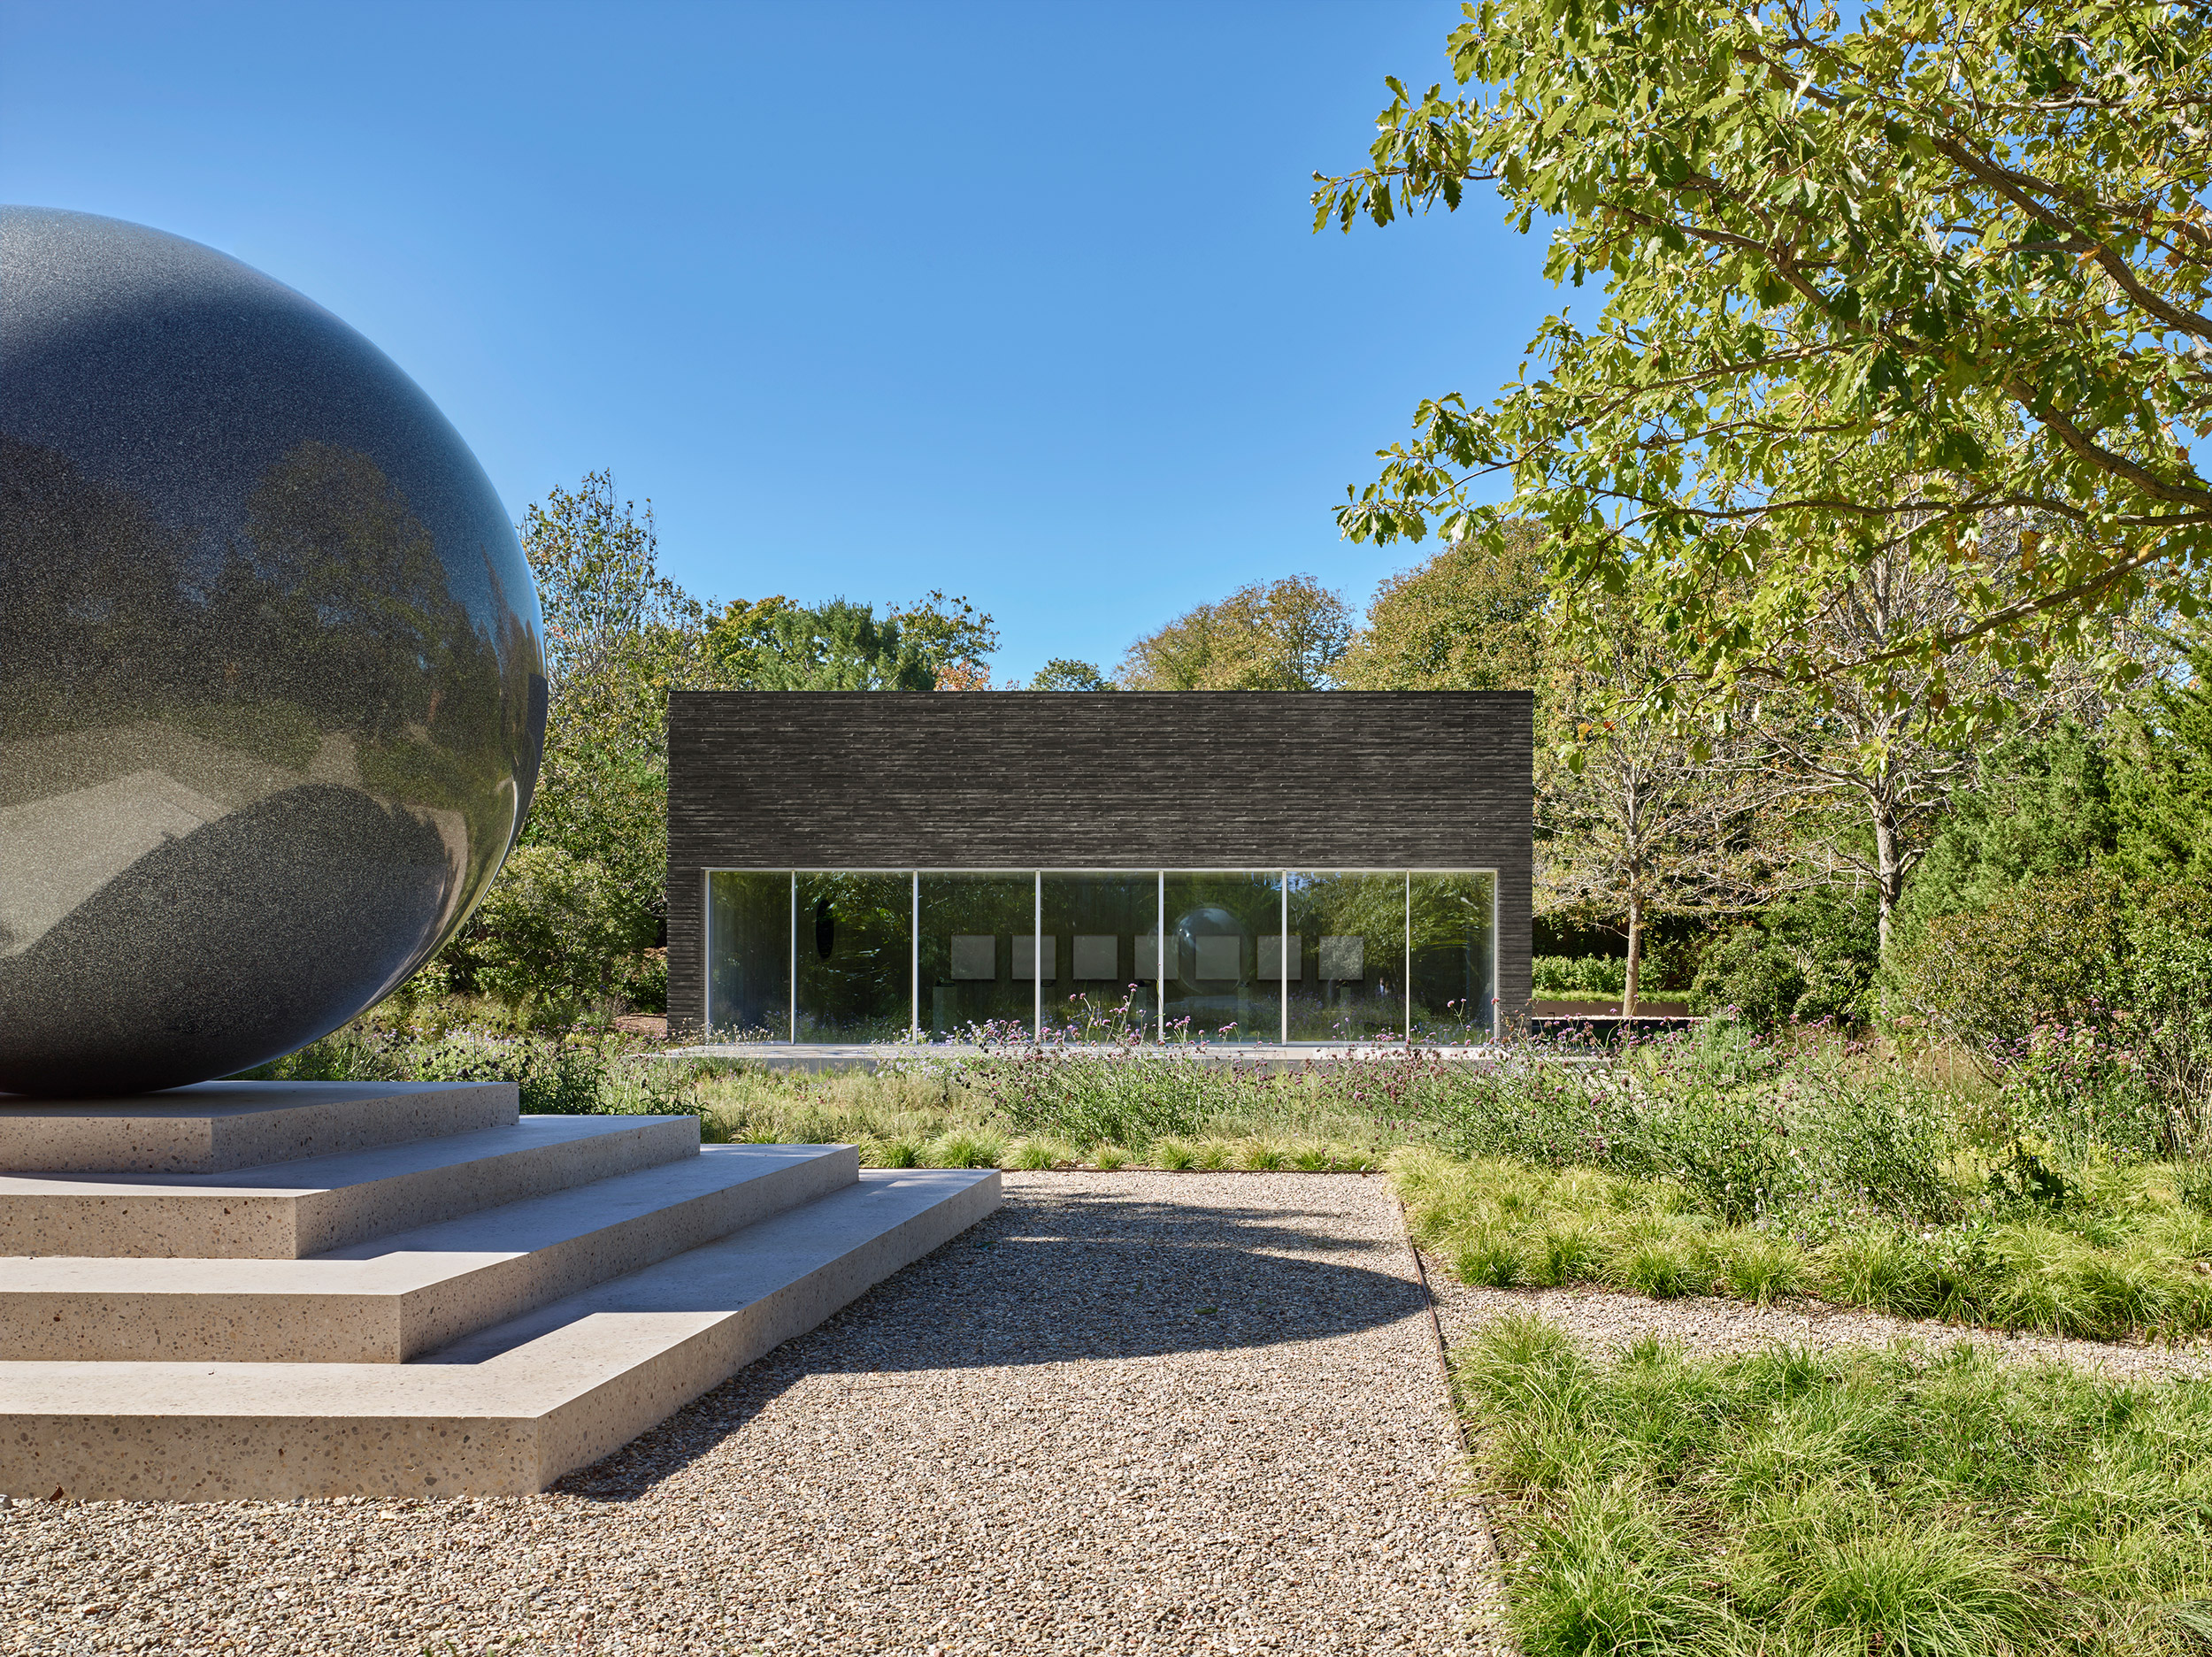 Project: De Maria Pavilion. Architect: Gluckman Tang Architects. Landscape Architect: LaGuardia Design Group. Photo: Nikolas Koenig.